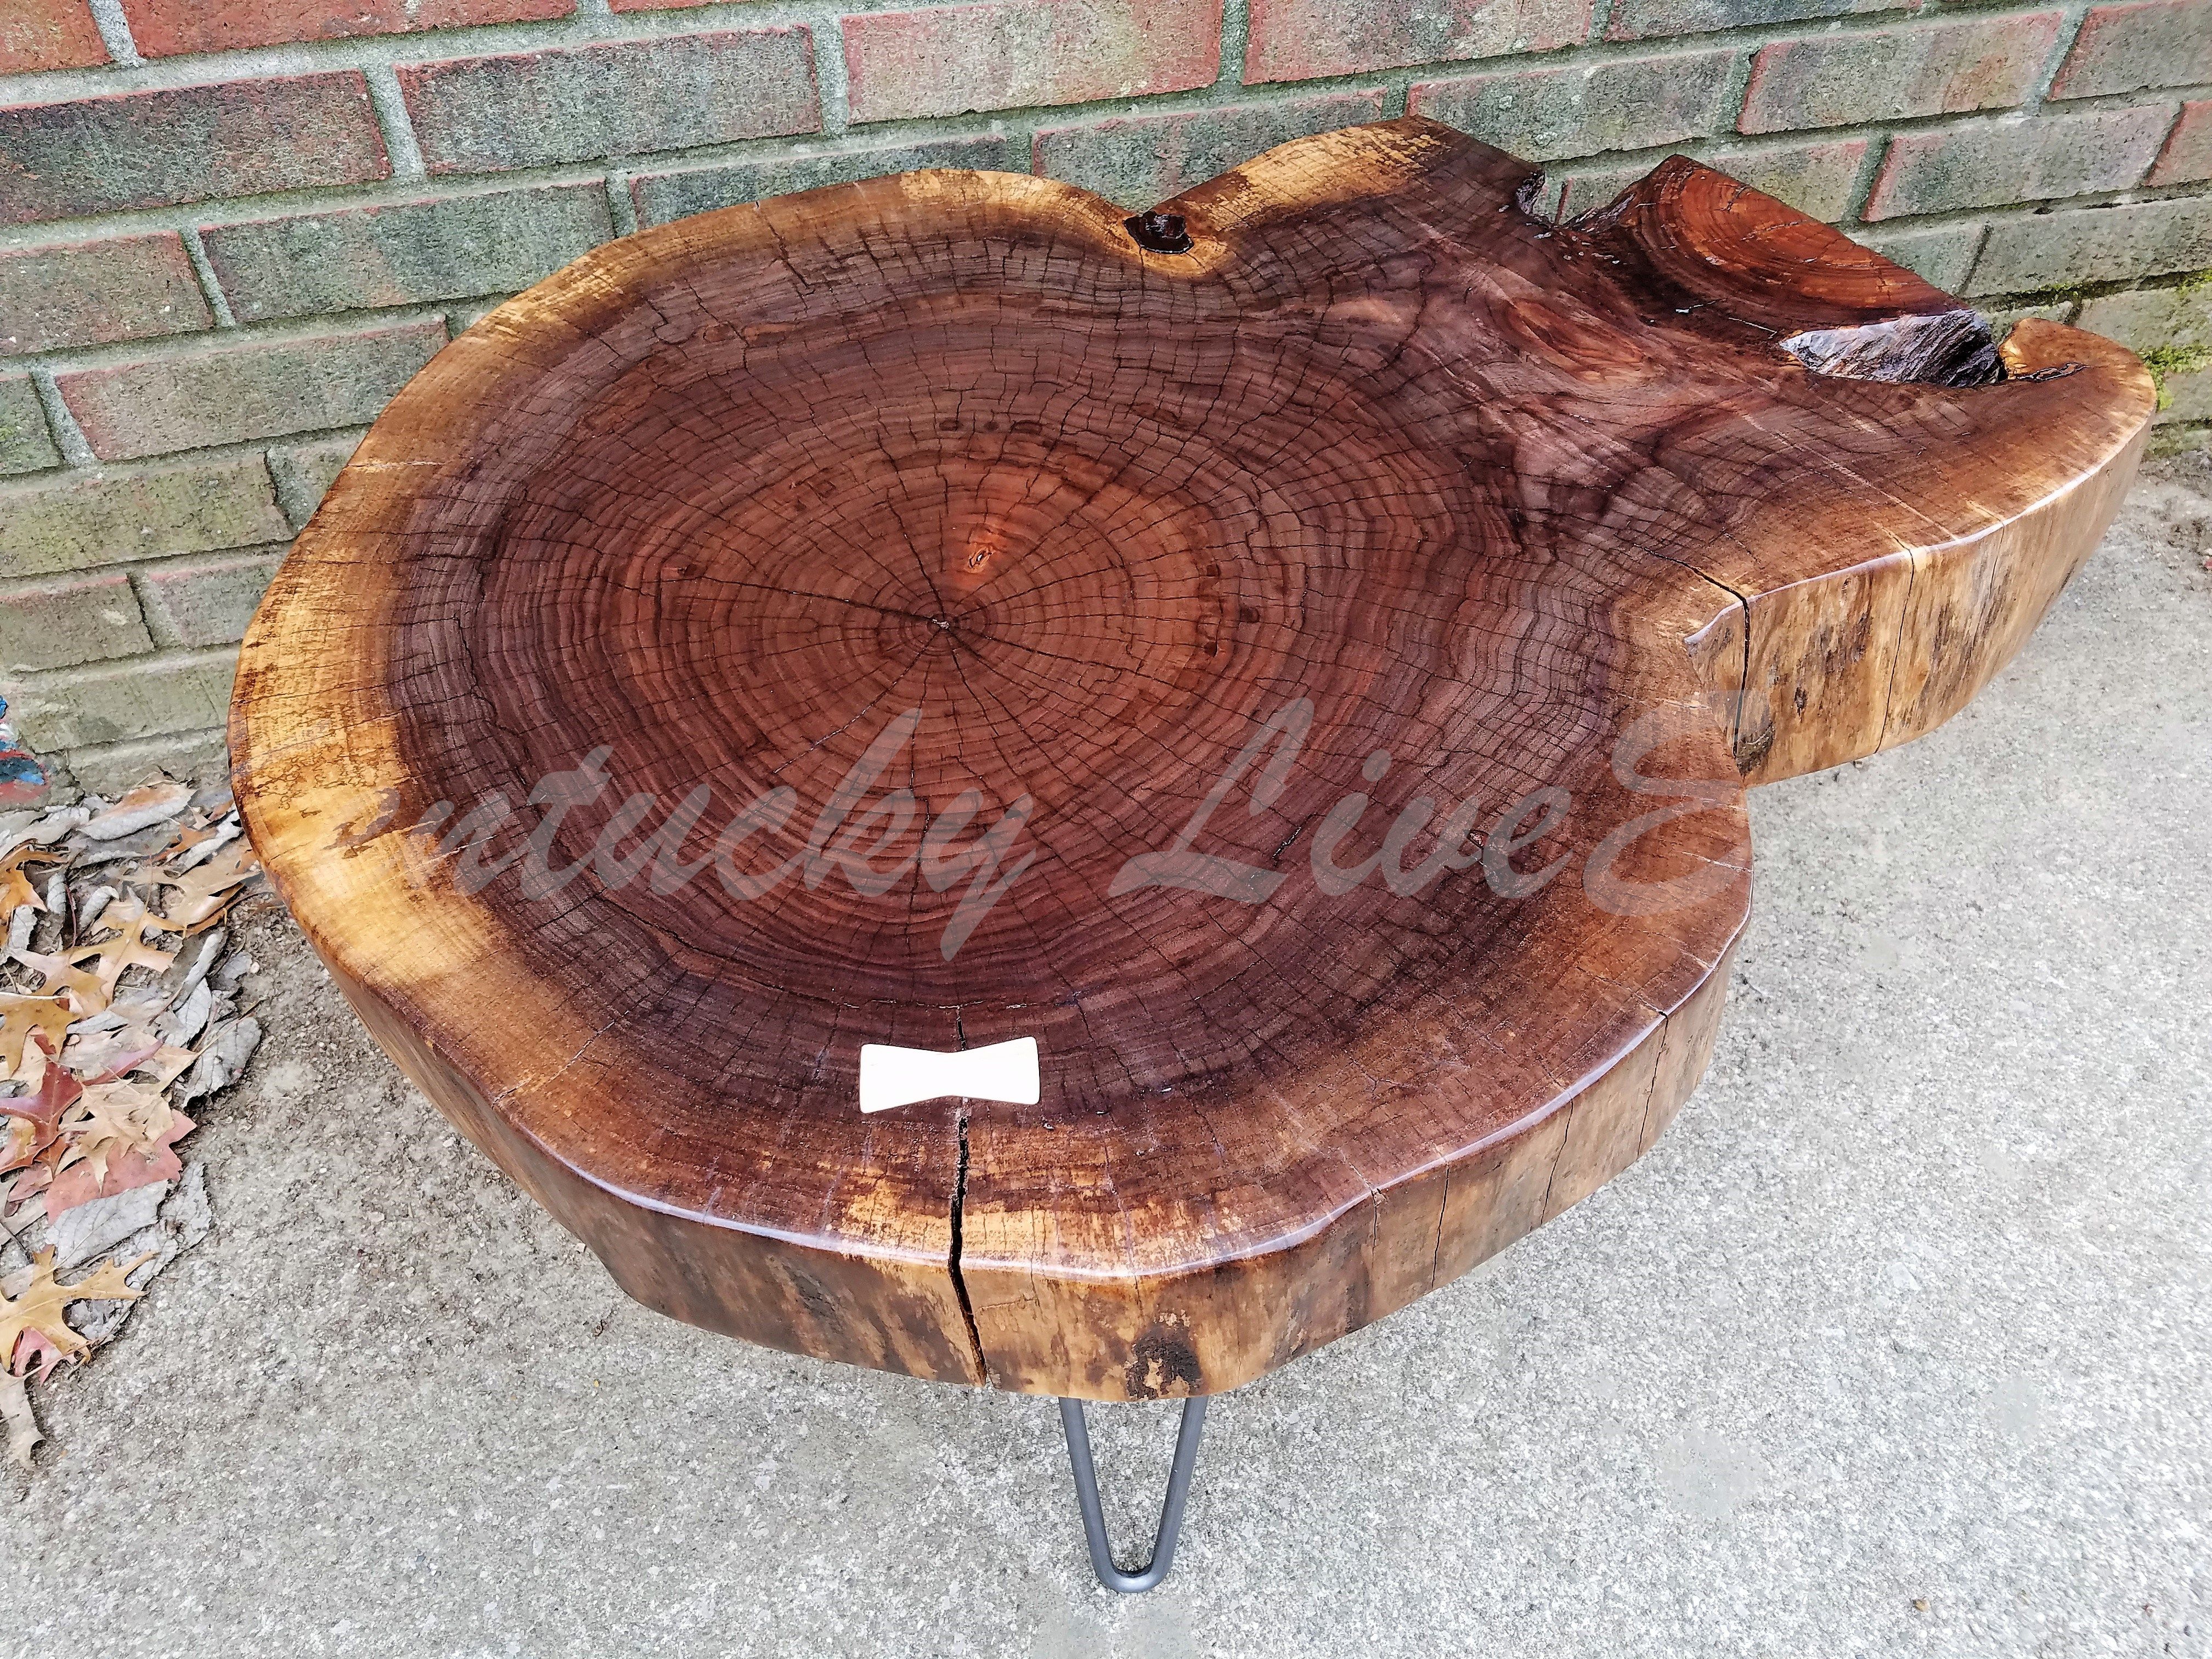 Live Egde log table